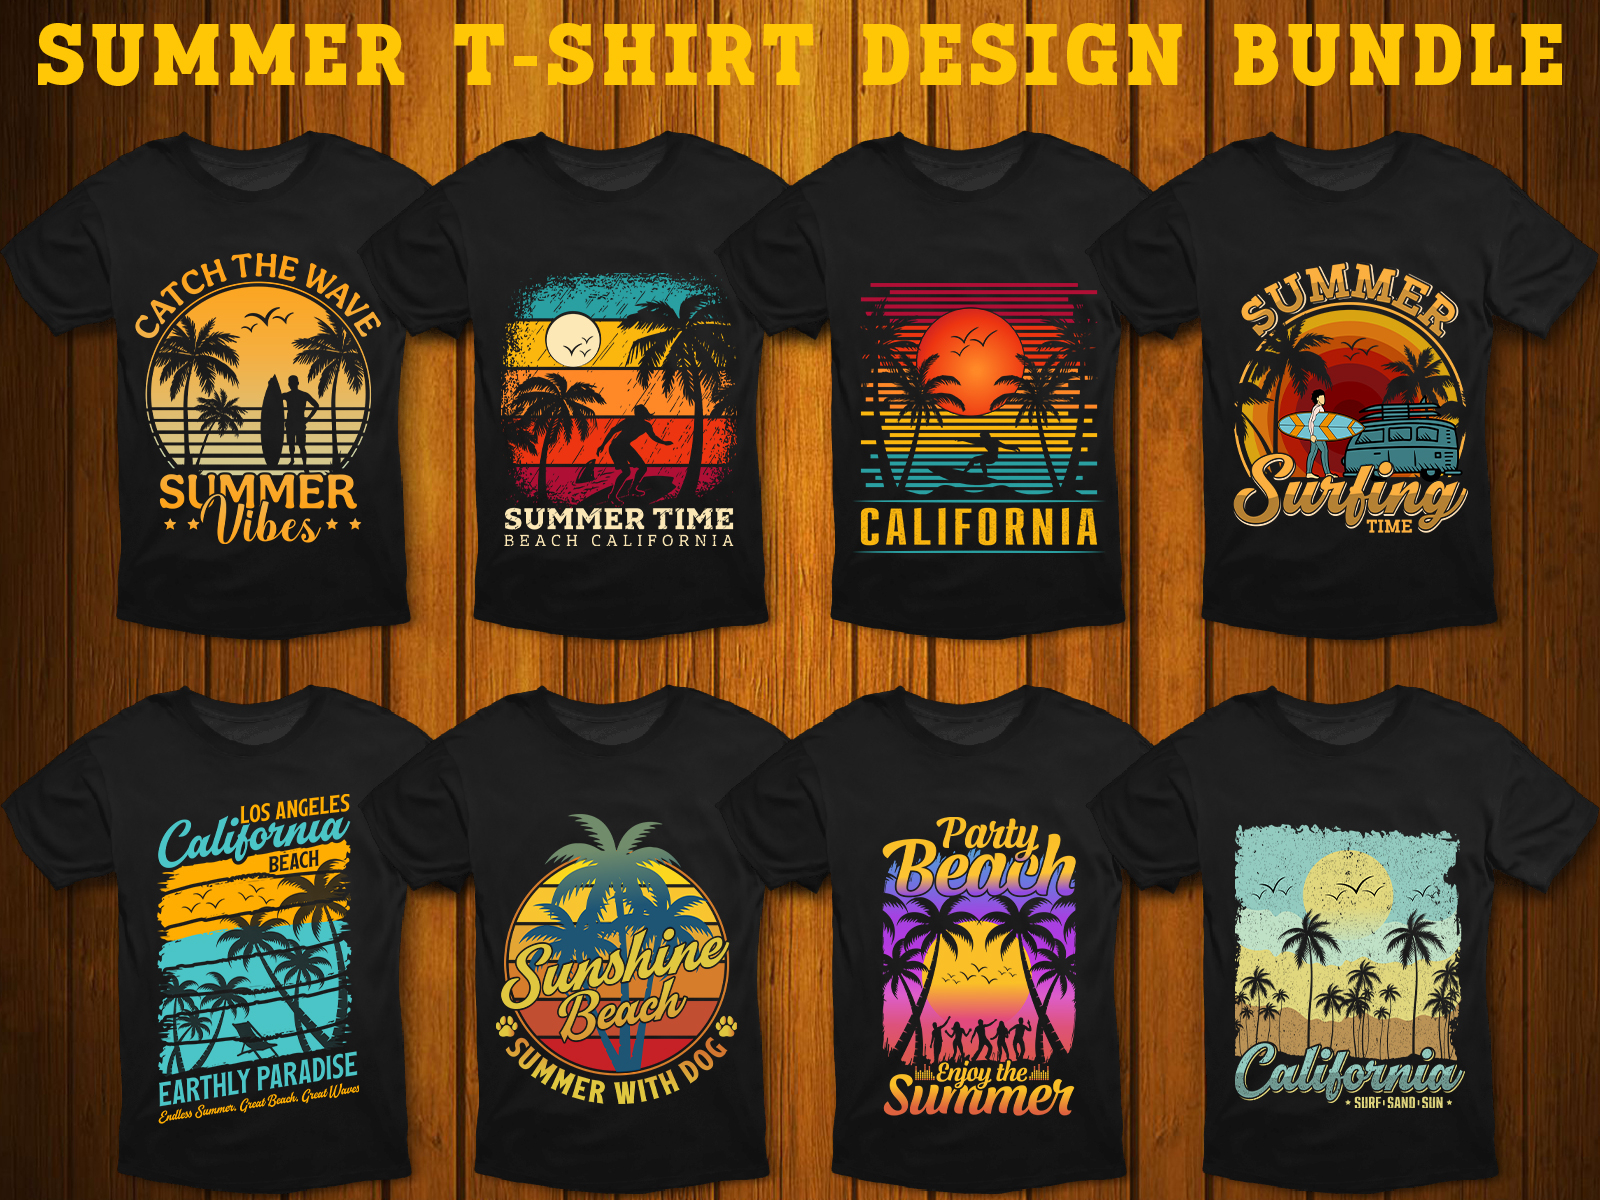 Summer T-Shirt Design Bundle by Amit Karmaker on Dribbble